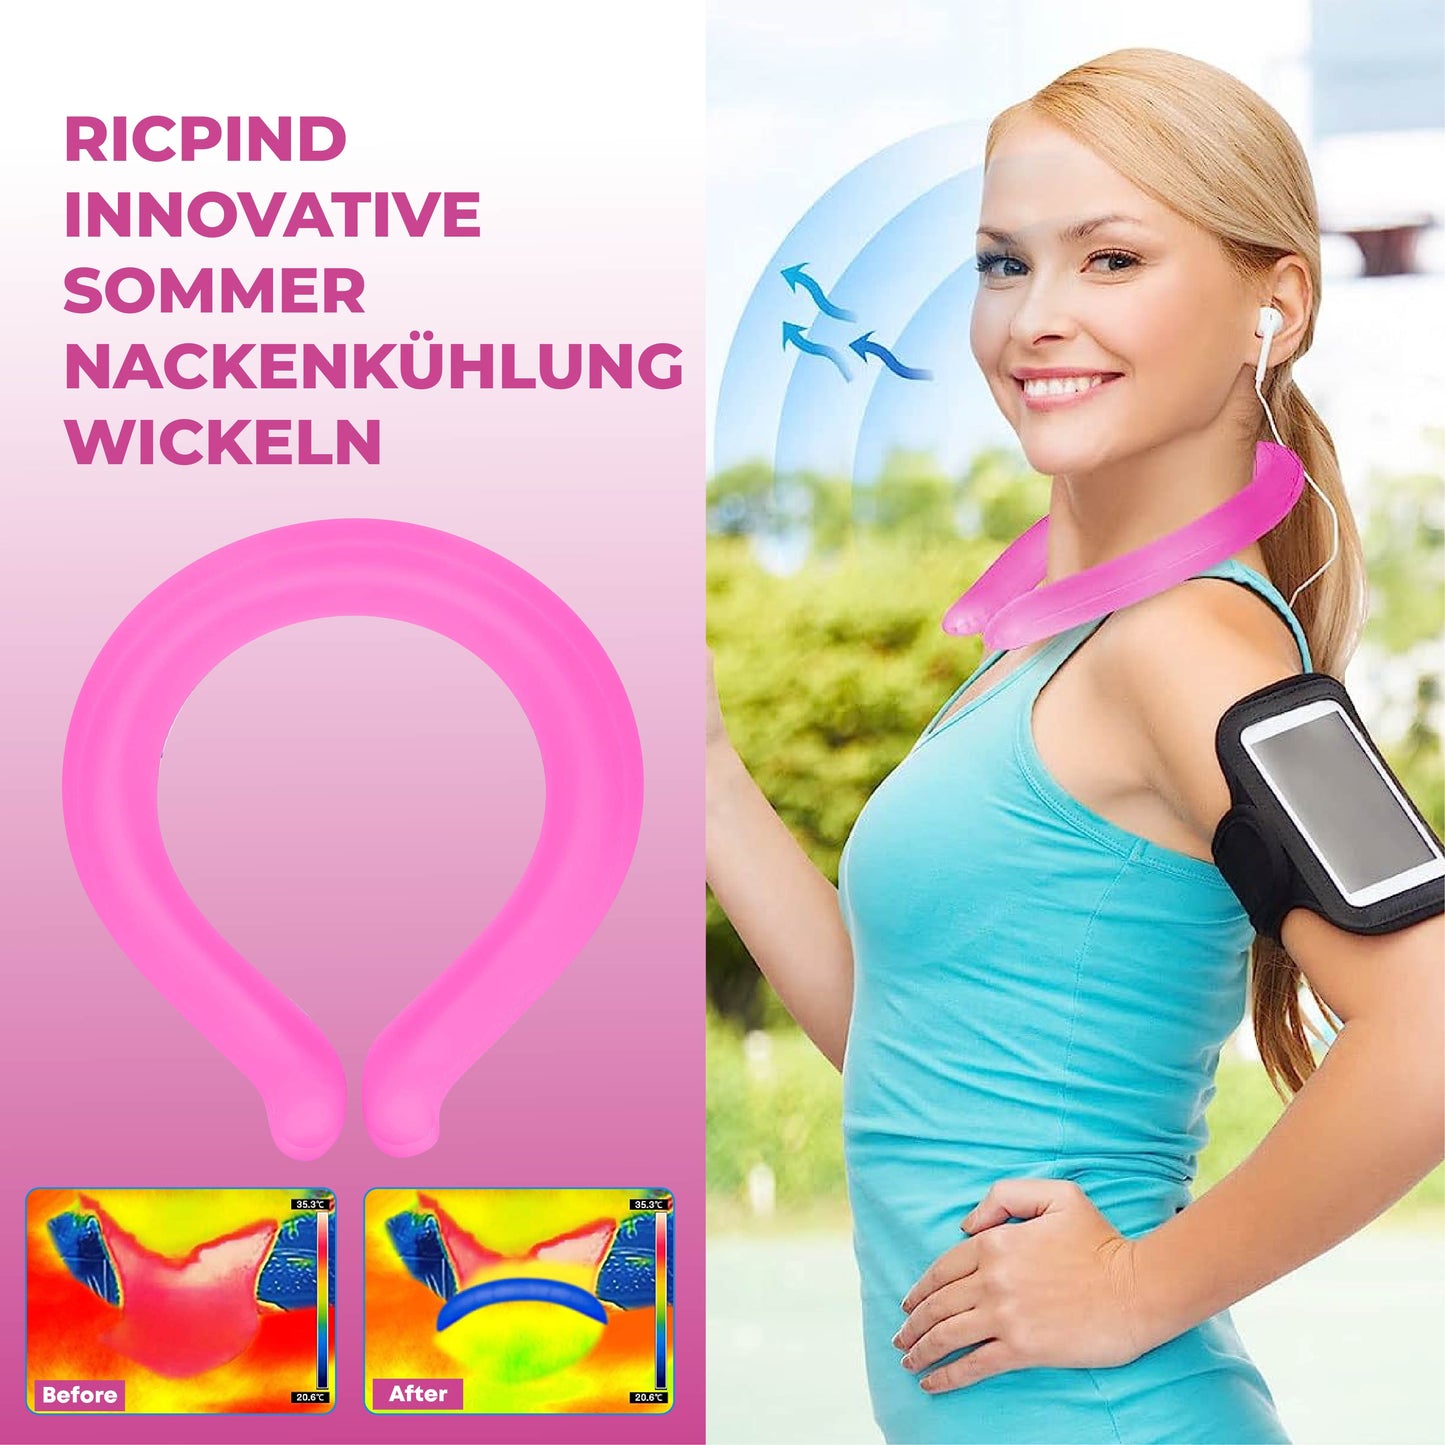 Ricpind Innovative Sommer NackenKühlung Wickeln